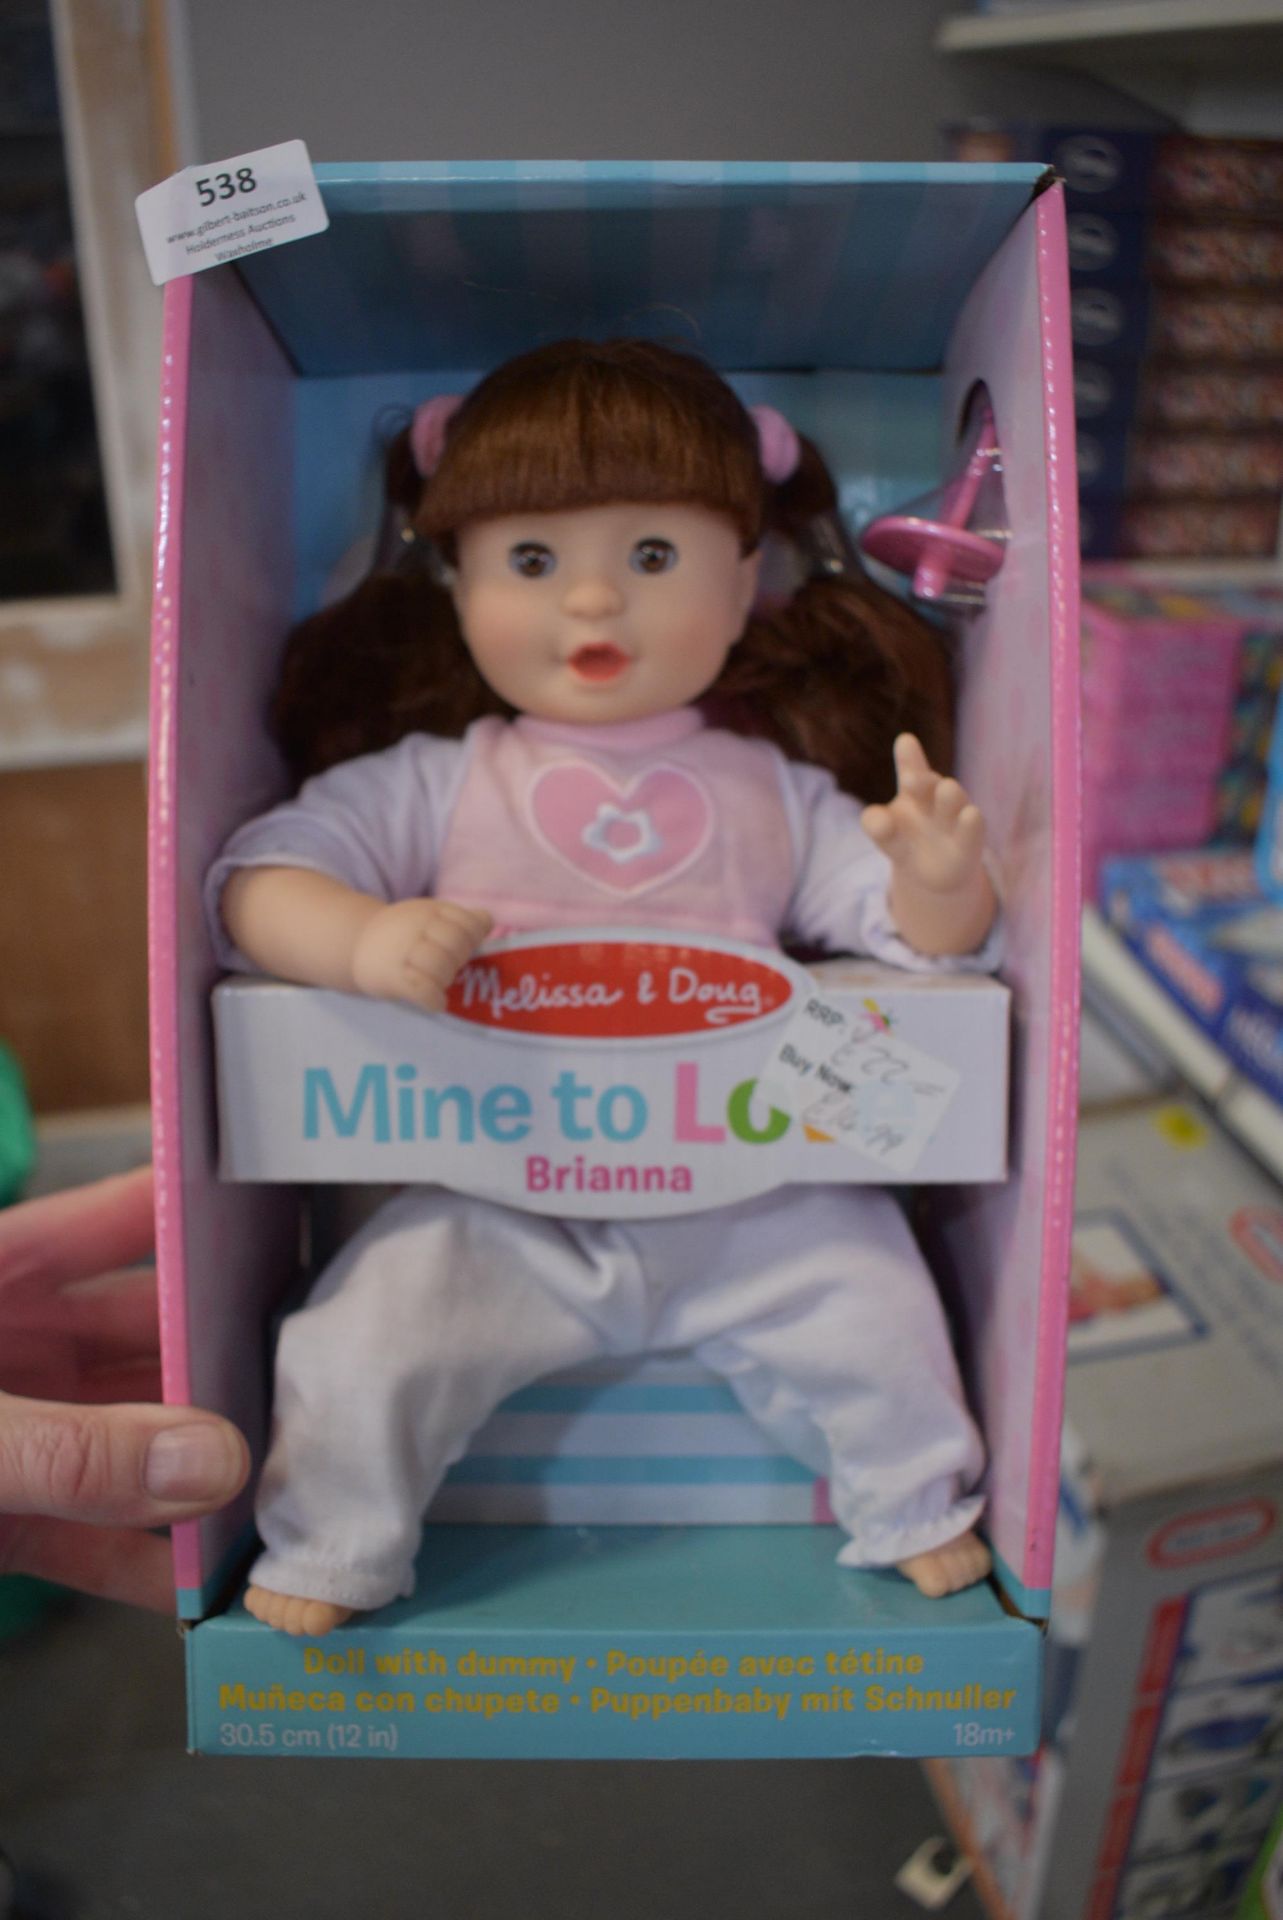 Melissa & Doug Mine to Love Brianna Doll - Image 2 of 4